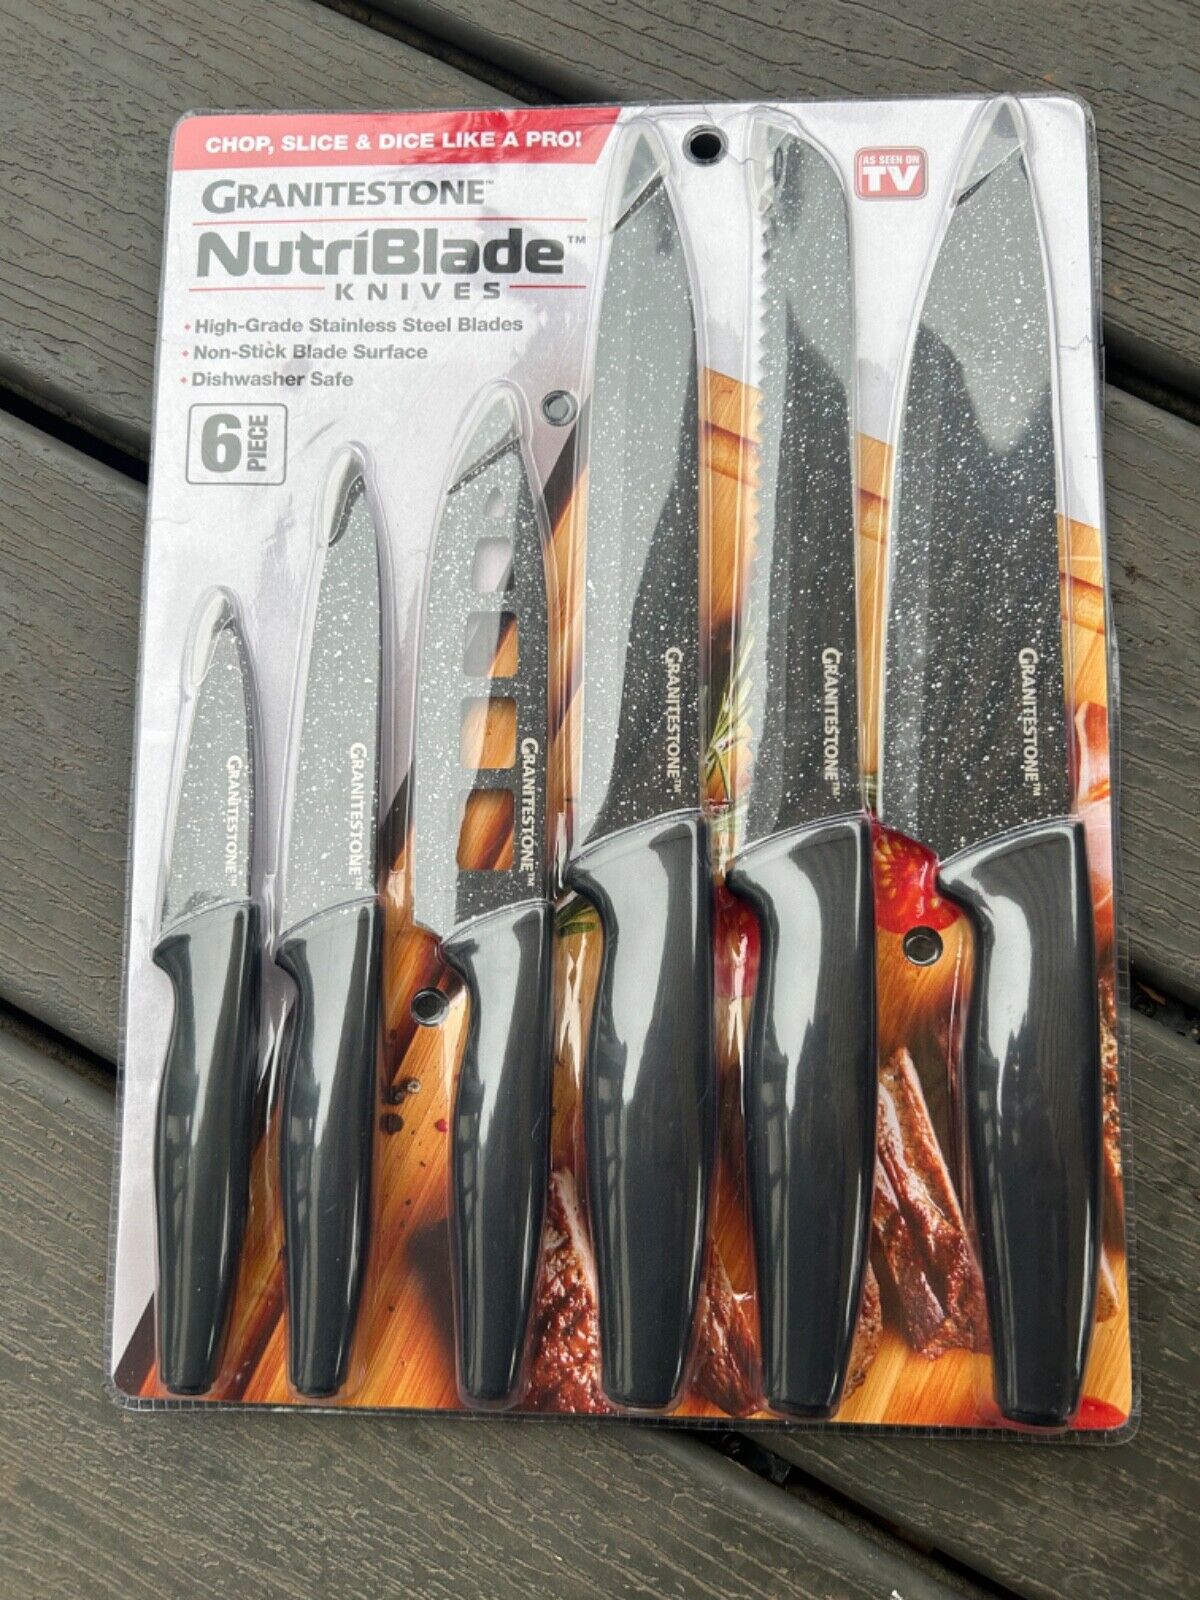 Nutriblade 6 PC Knife Set by Granitestone, Professional Kitchen Chef�s Knives